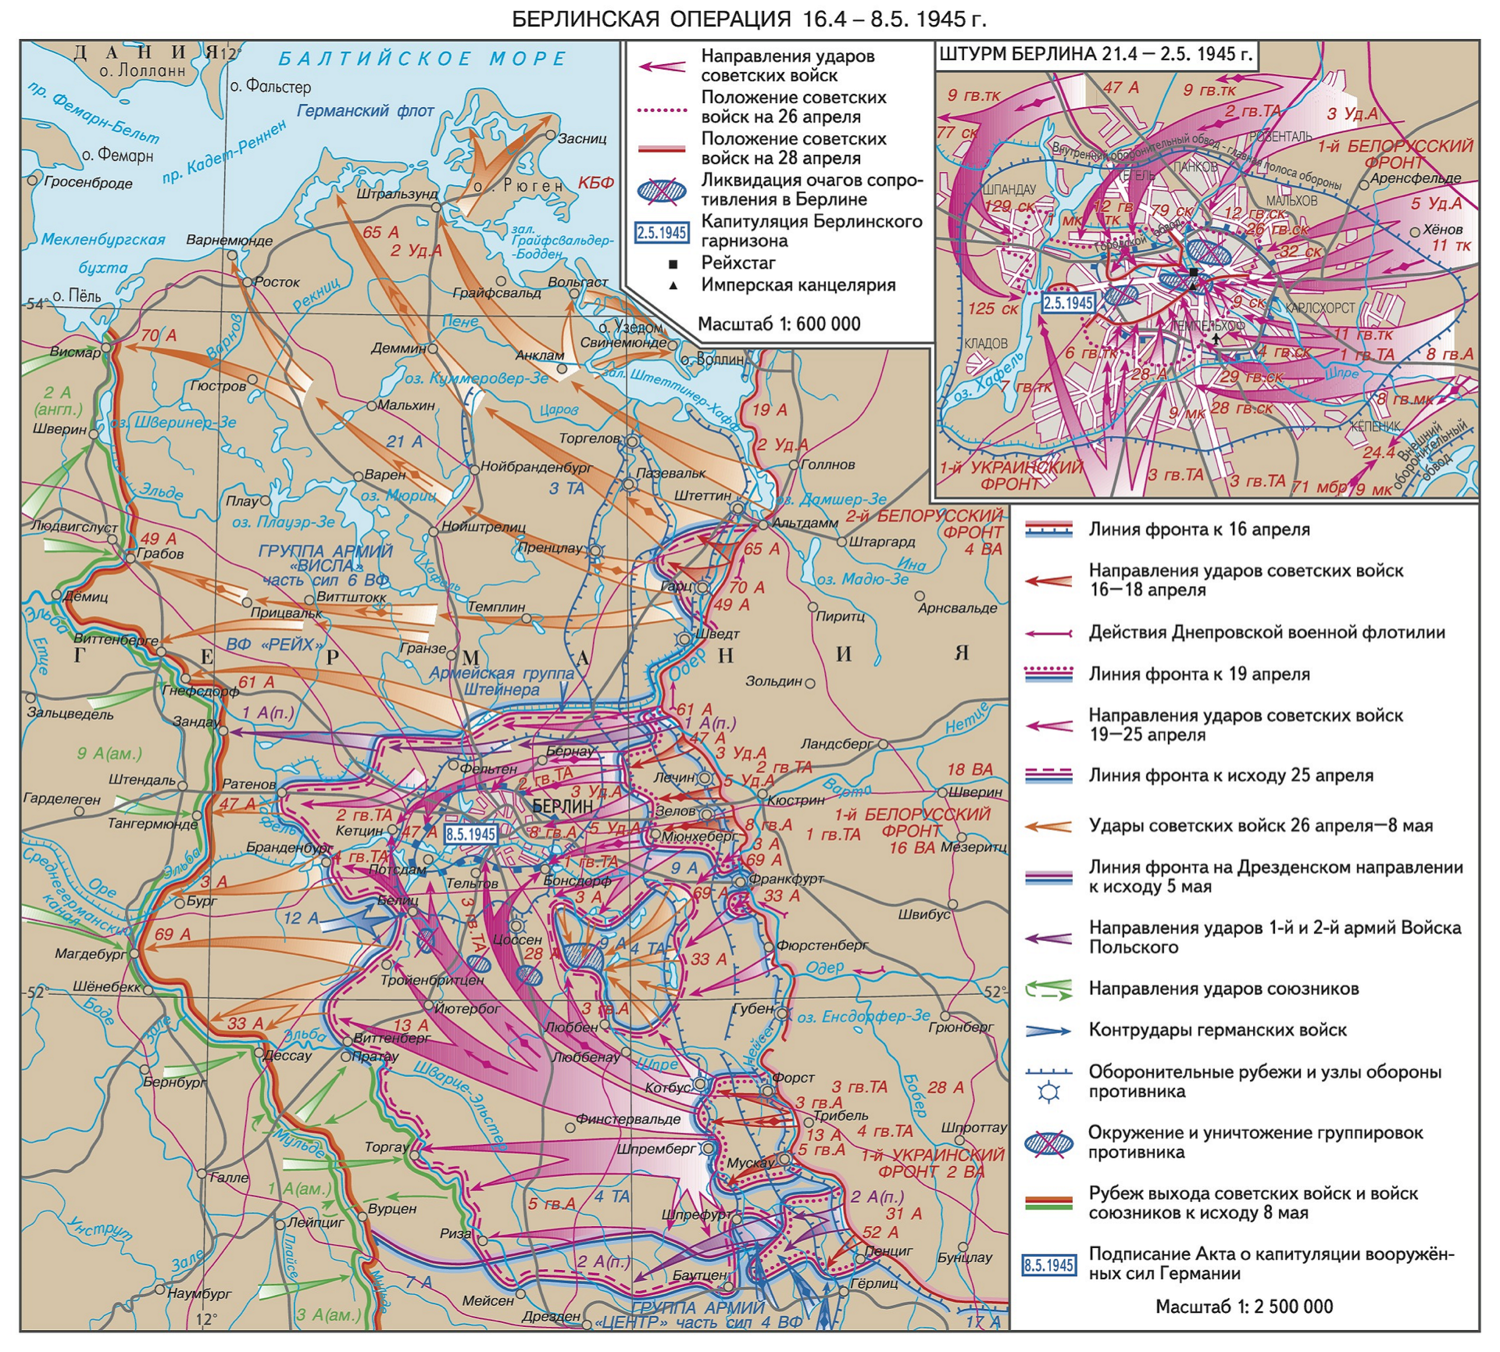 8 апреля операция. Берлинская операция 1945 г карта. Операция Берлин 1945 карта. Карта Берлинской операции 1945 года. Карта Берлинской операции 16 апреля- 8 мая 1945.